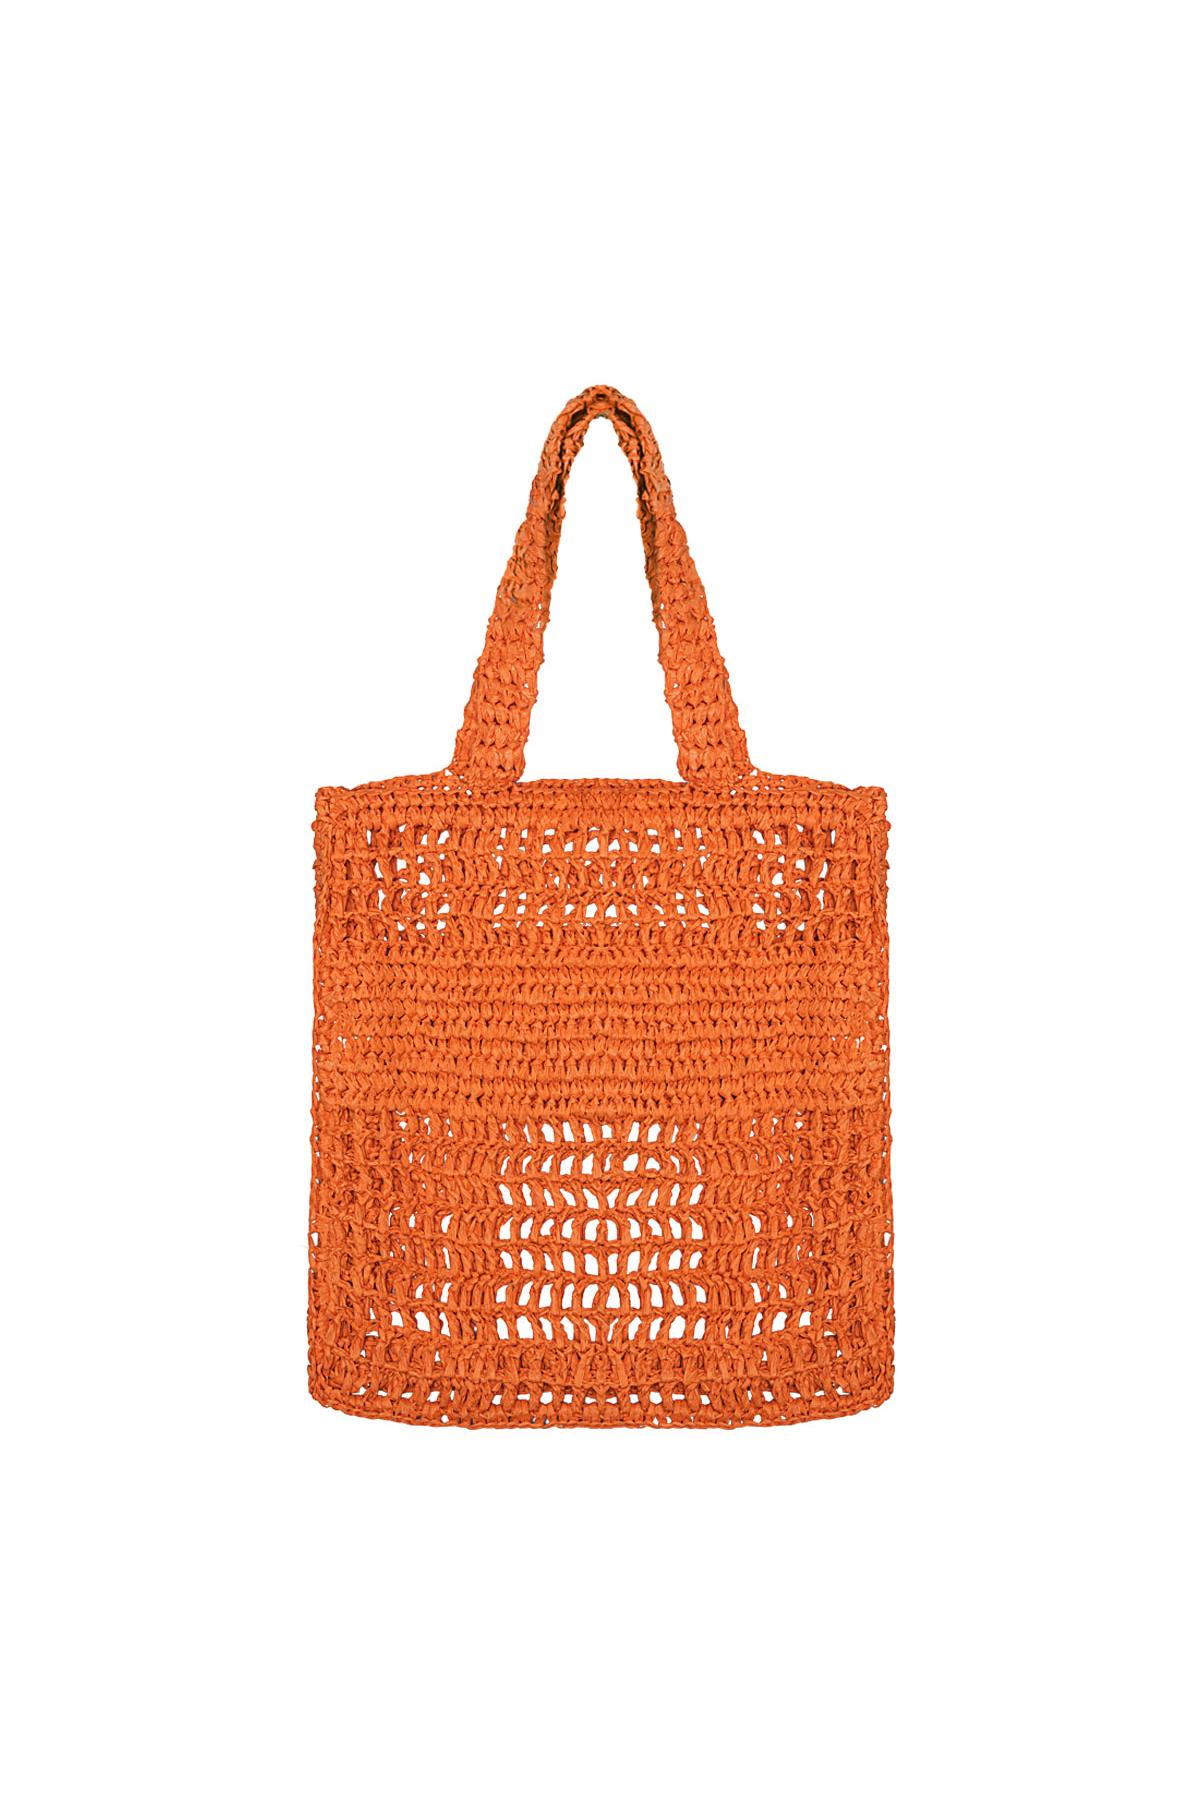 Tote bag crochet Orange Paper h5 